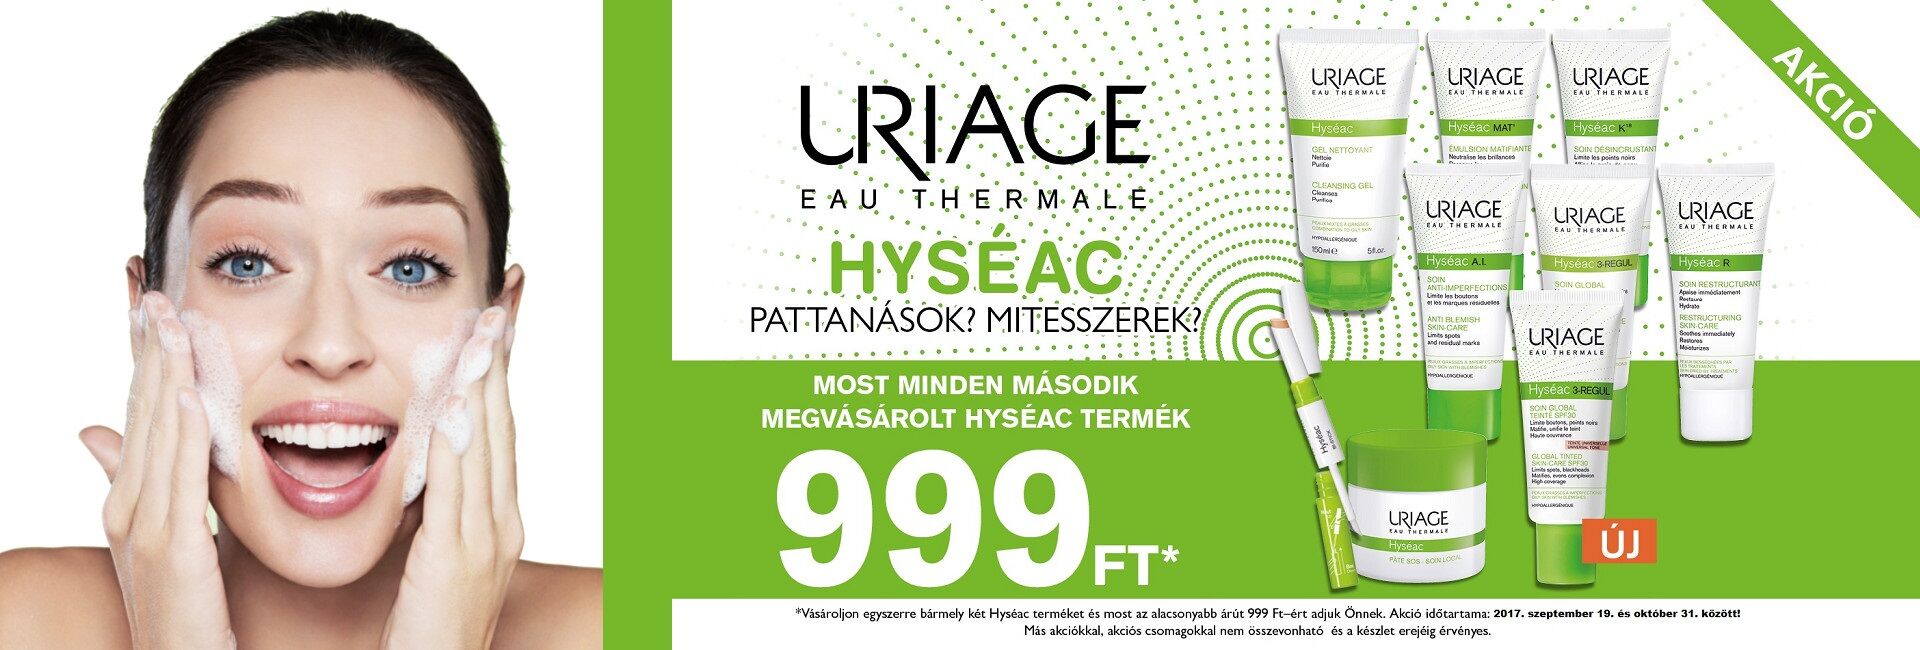 Uriage akció: minden 2. uriage Hyséac termék most 999Ft!